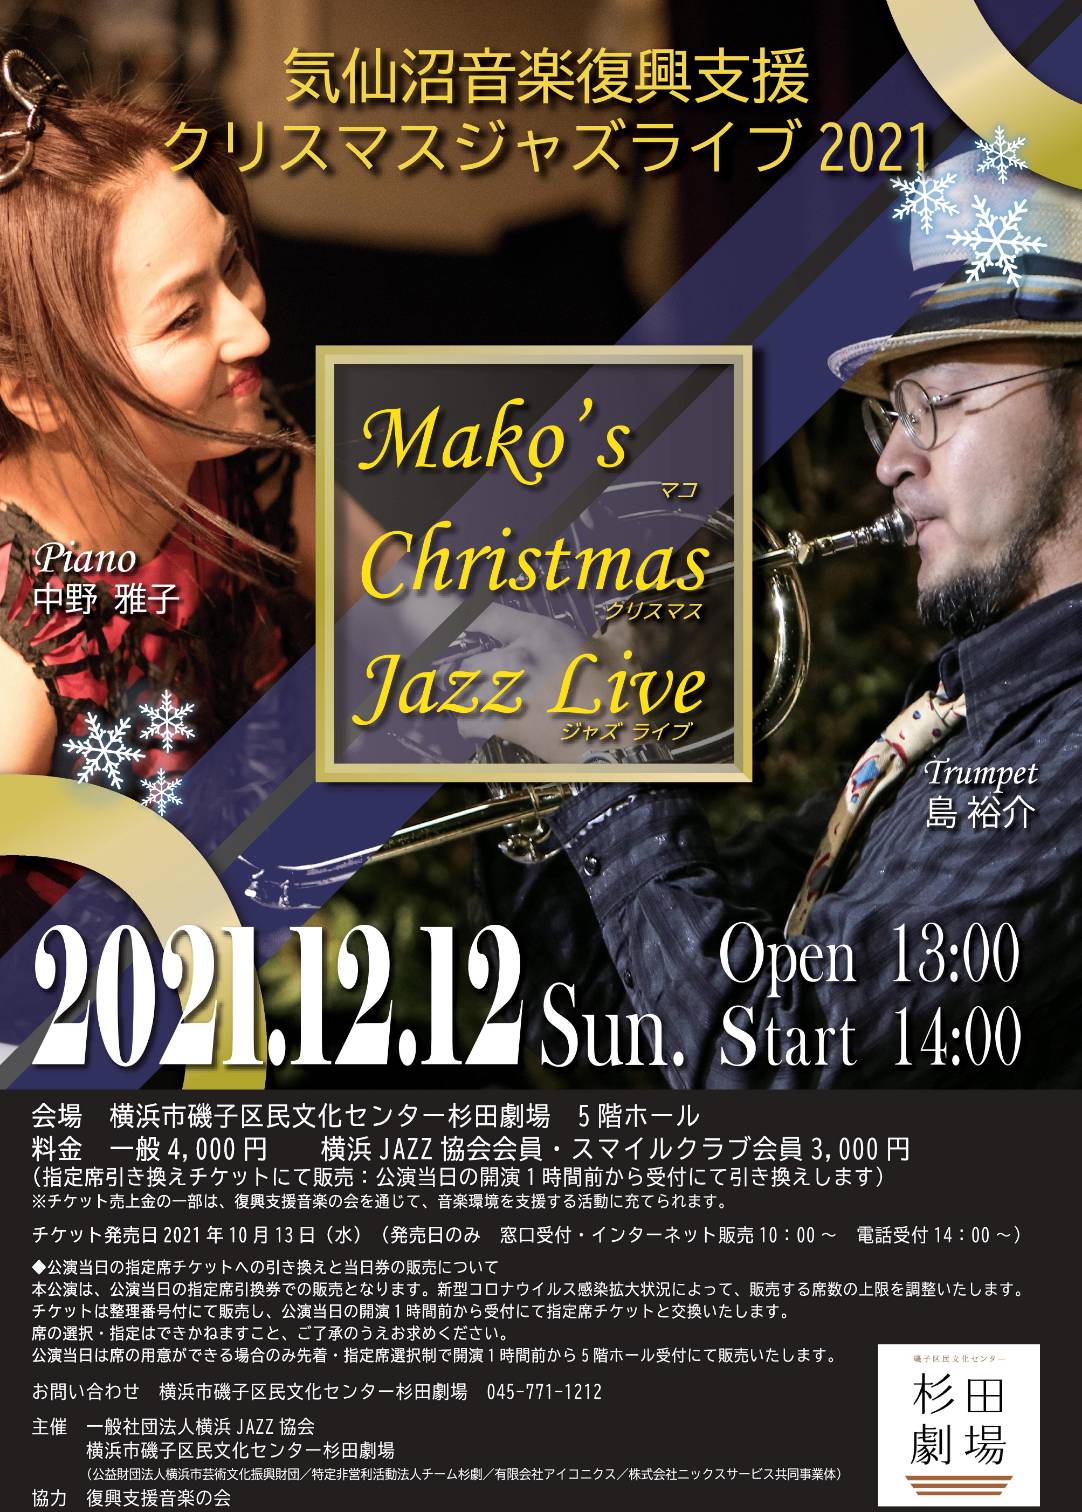 Mako’s Christmas Jazz Live!